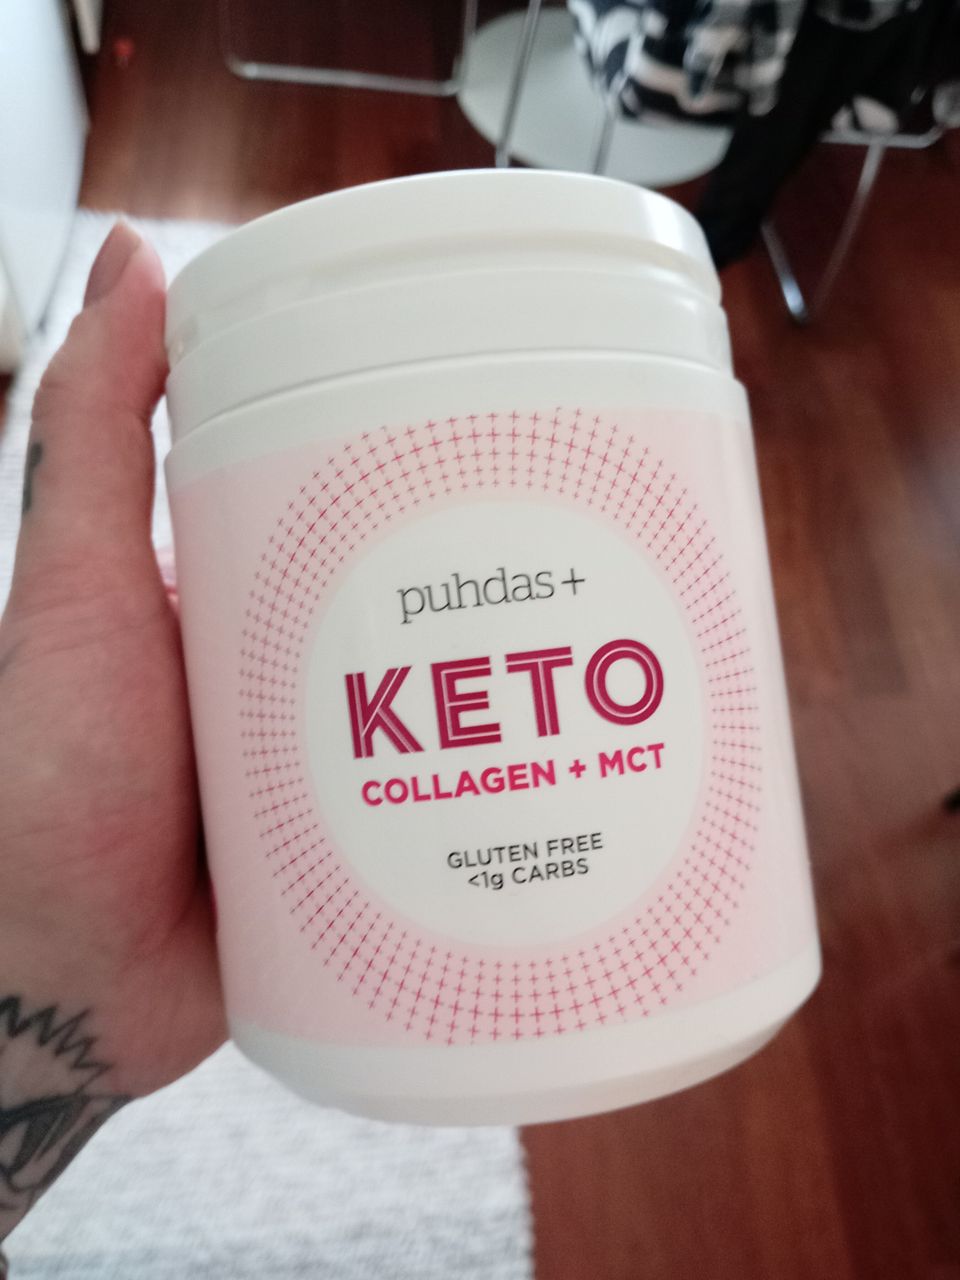 Keto collagen + mct